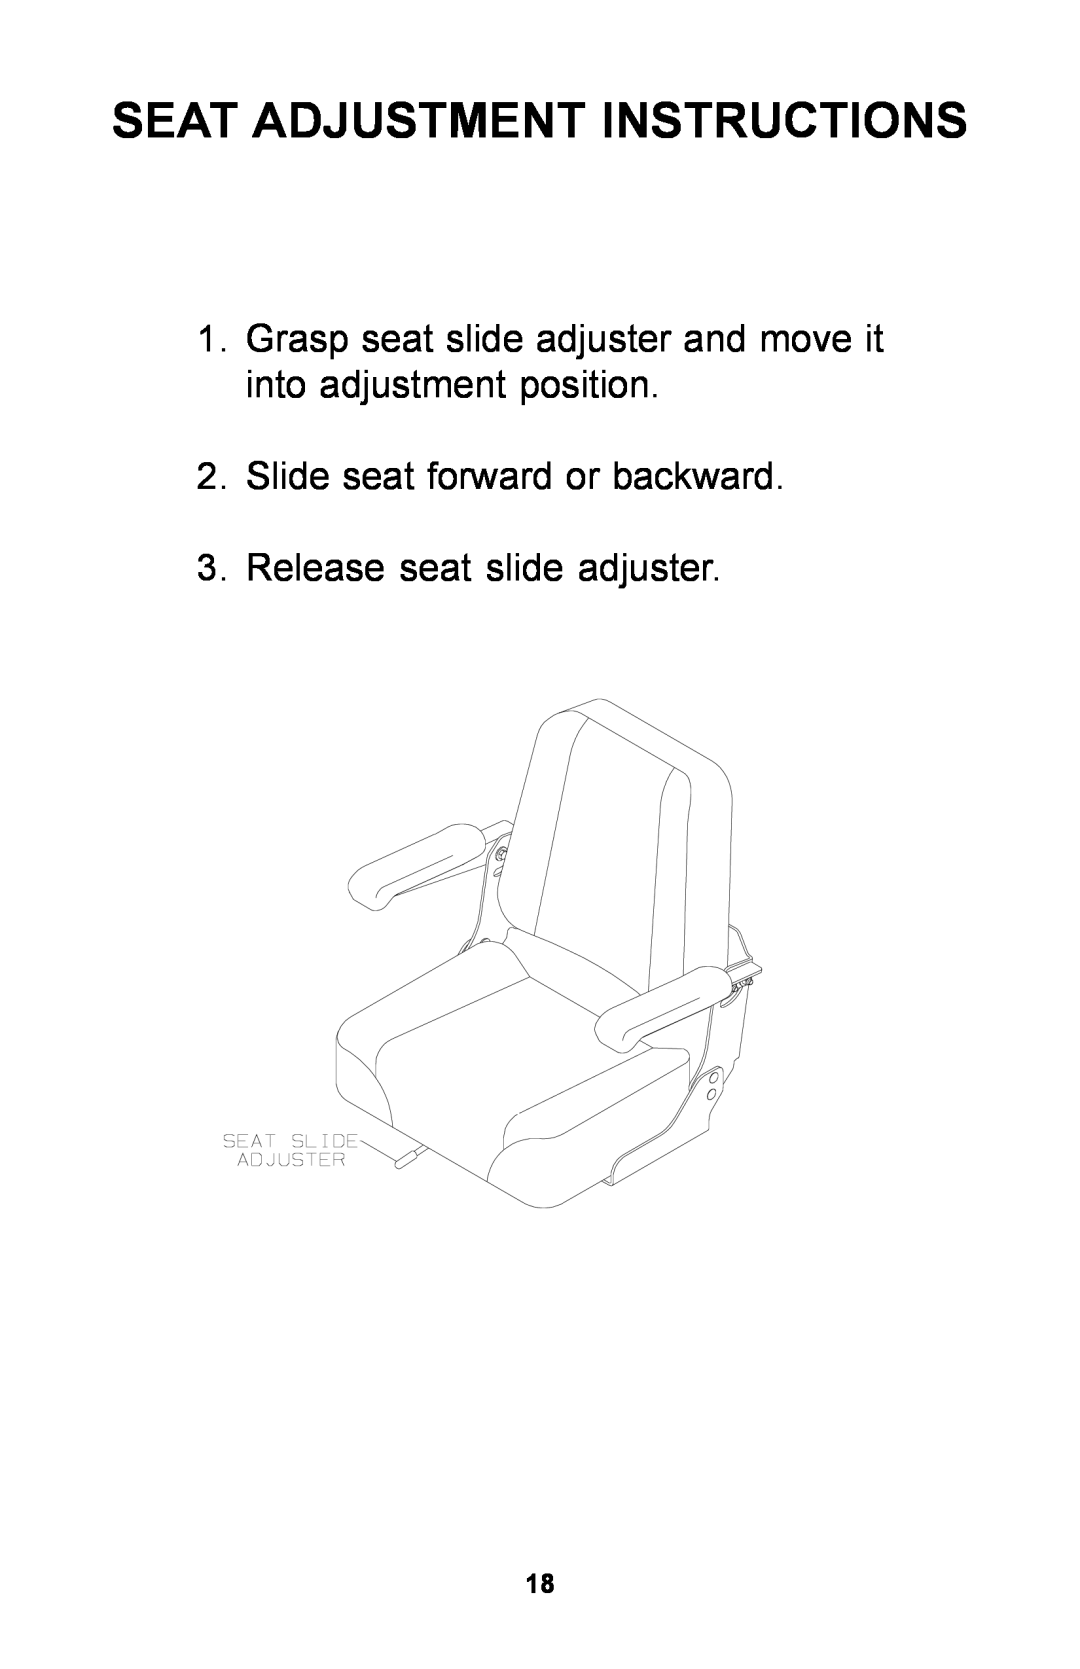 Dixon ZTR manual Seat Adjustment Instructions, Grasp seat slide adjuster and move it into adjustment position 